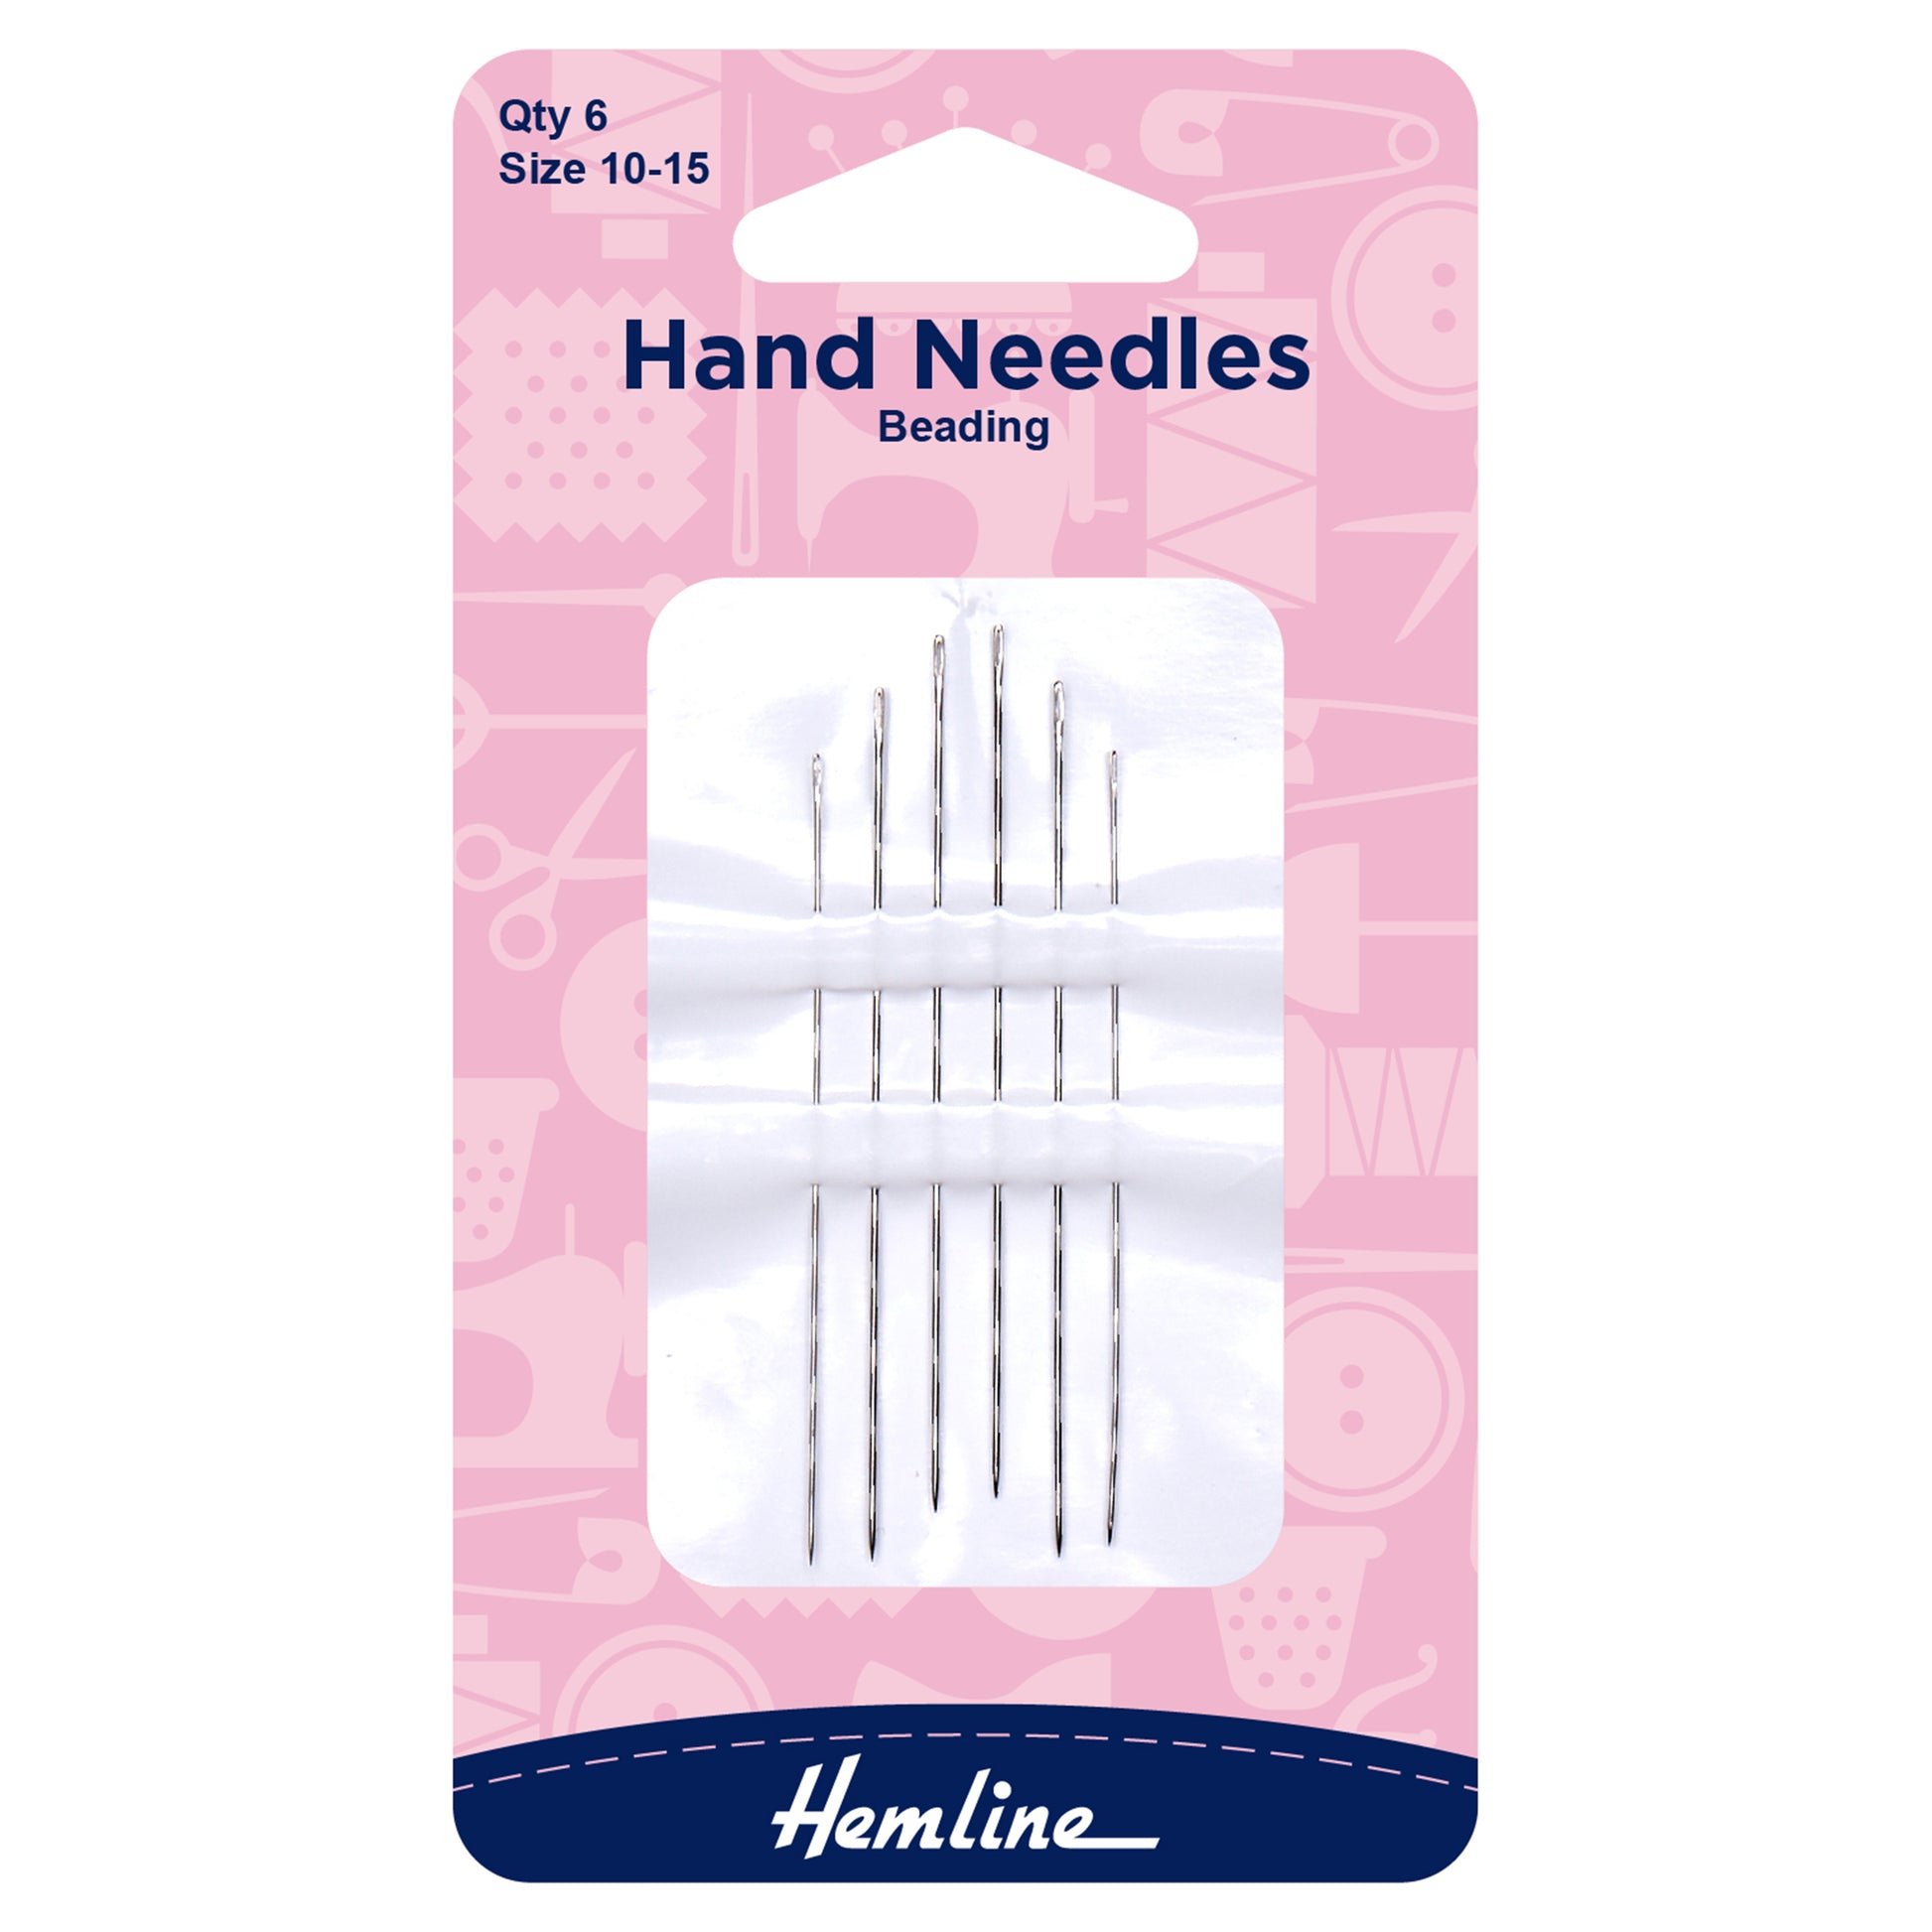 Hand Needles- Beading Size 10-15